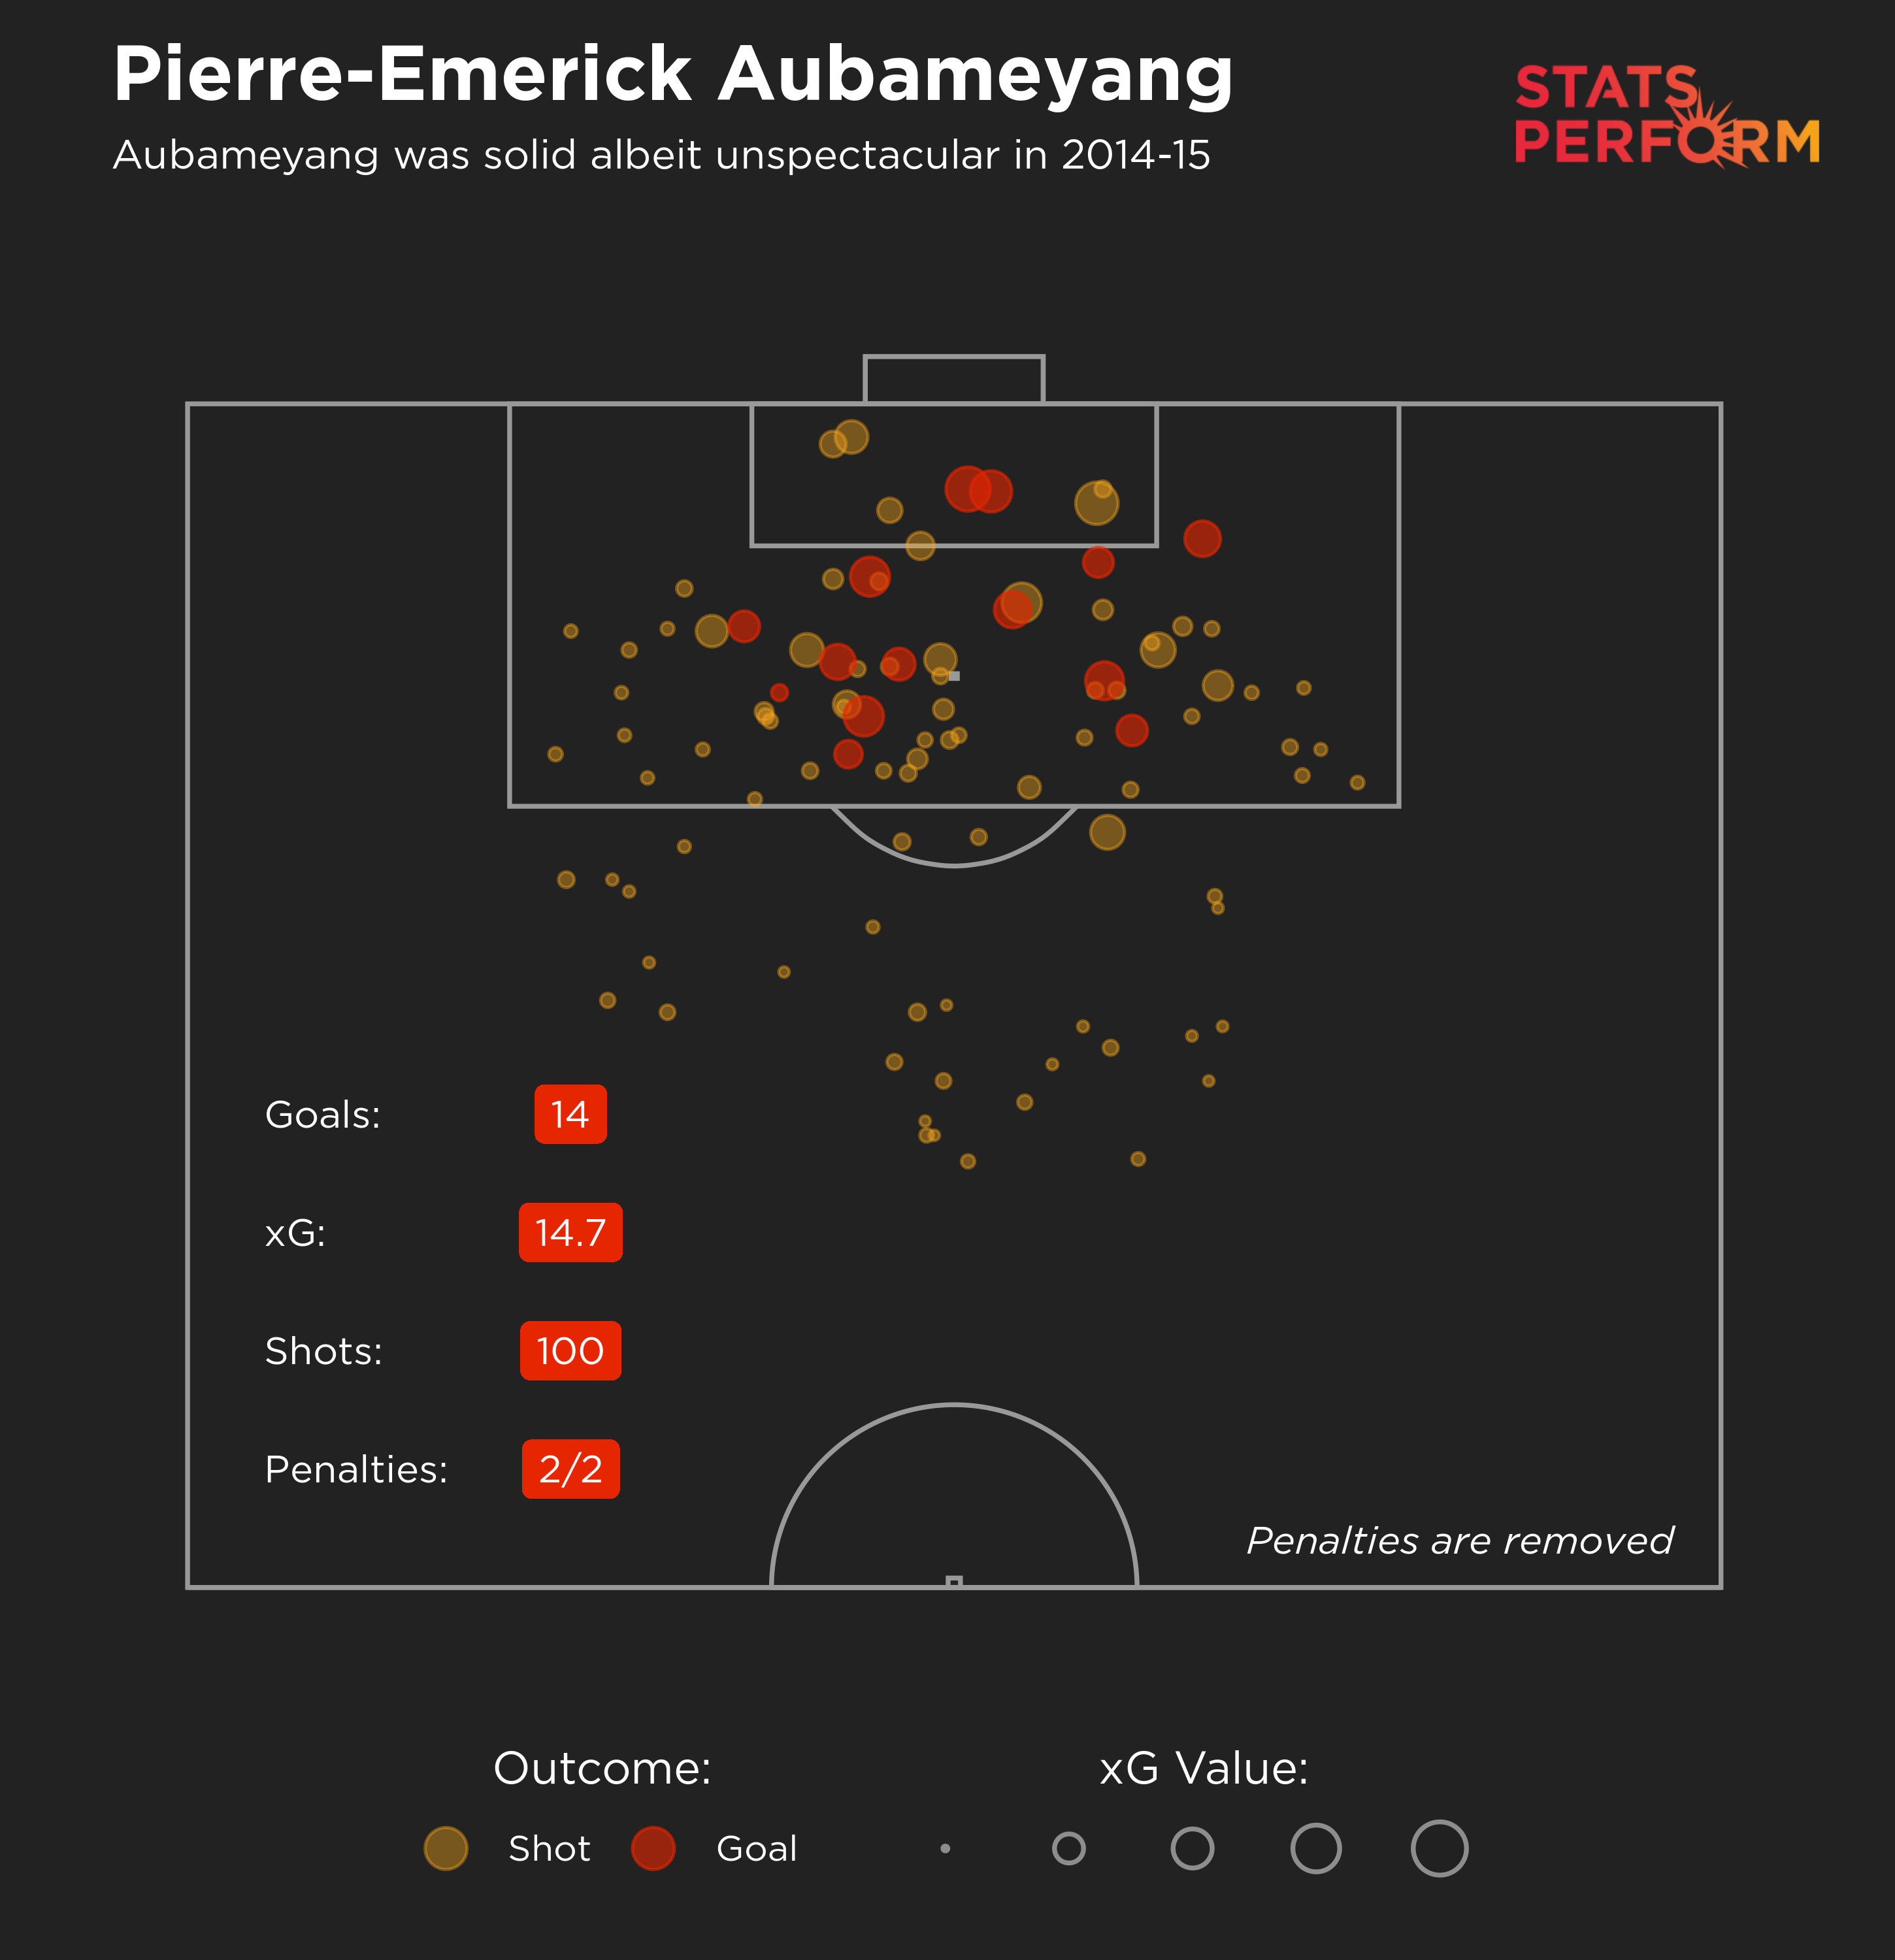 Pierre-Emerick Aubameyang was solid albeit unspectacular when replacing Lewandowski